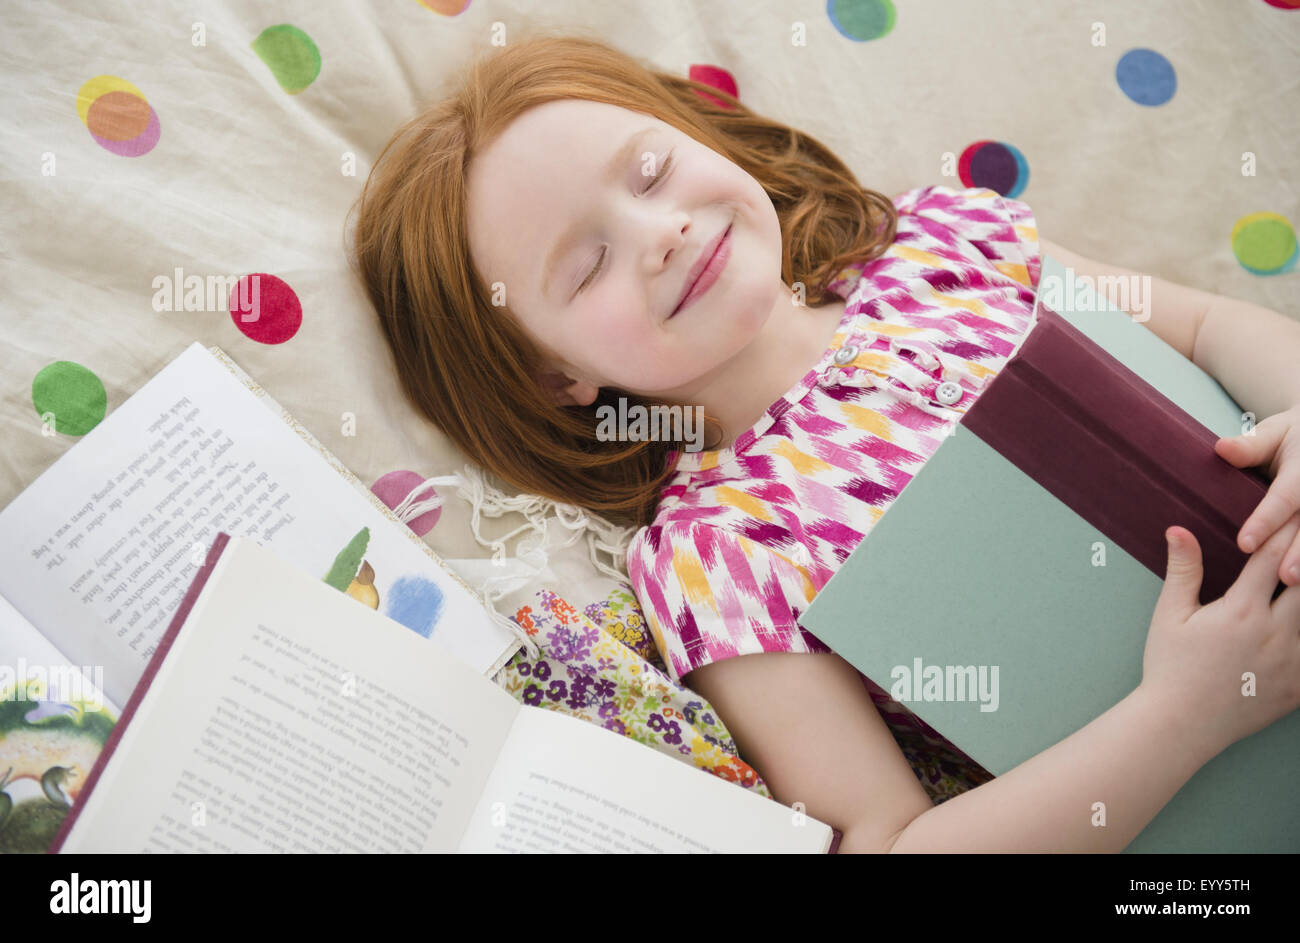 Caucasian girl reading books on bed Stock Photo